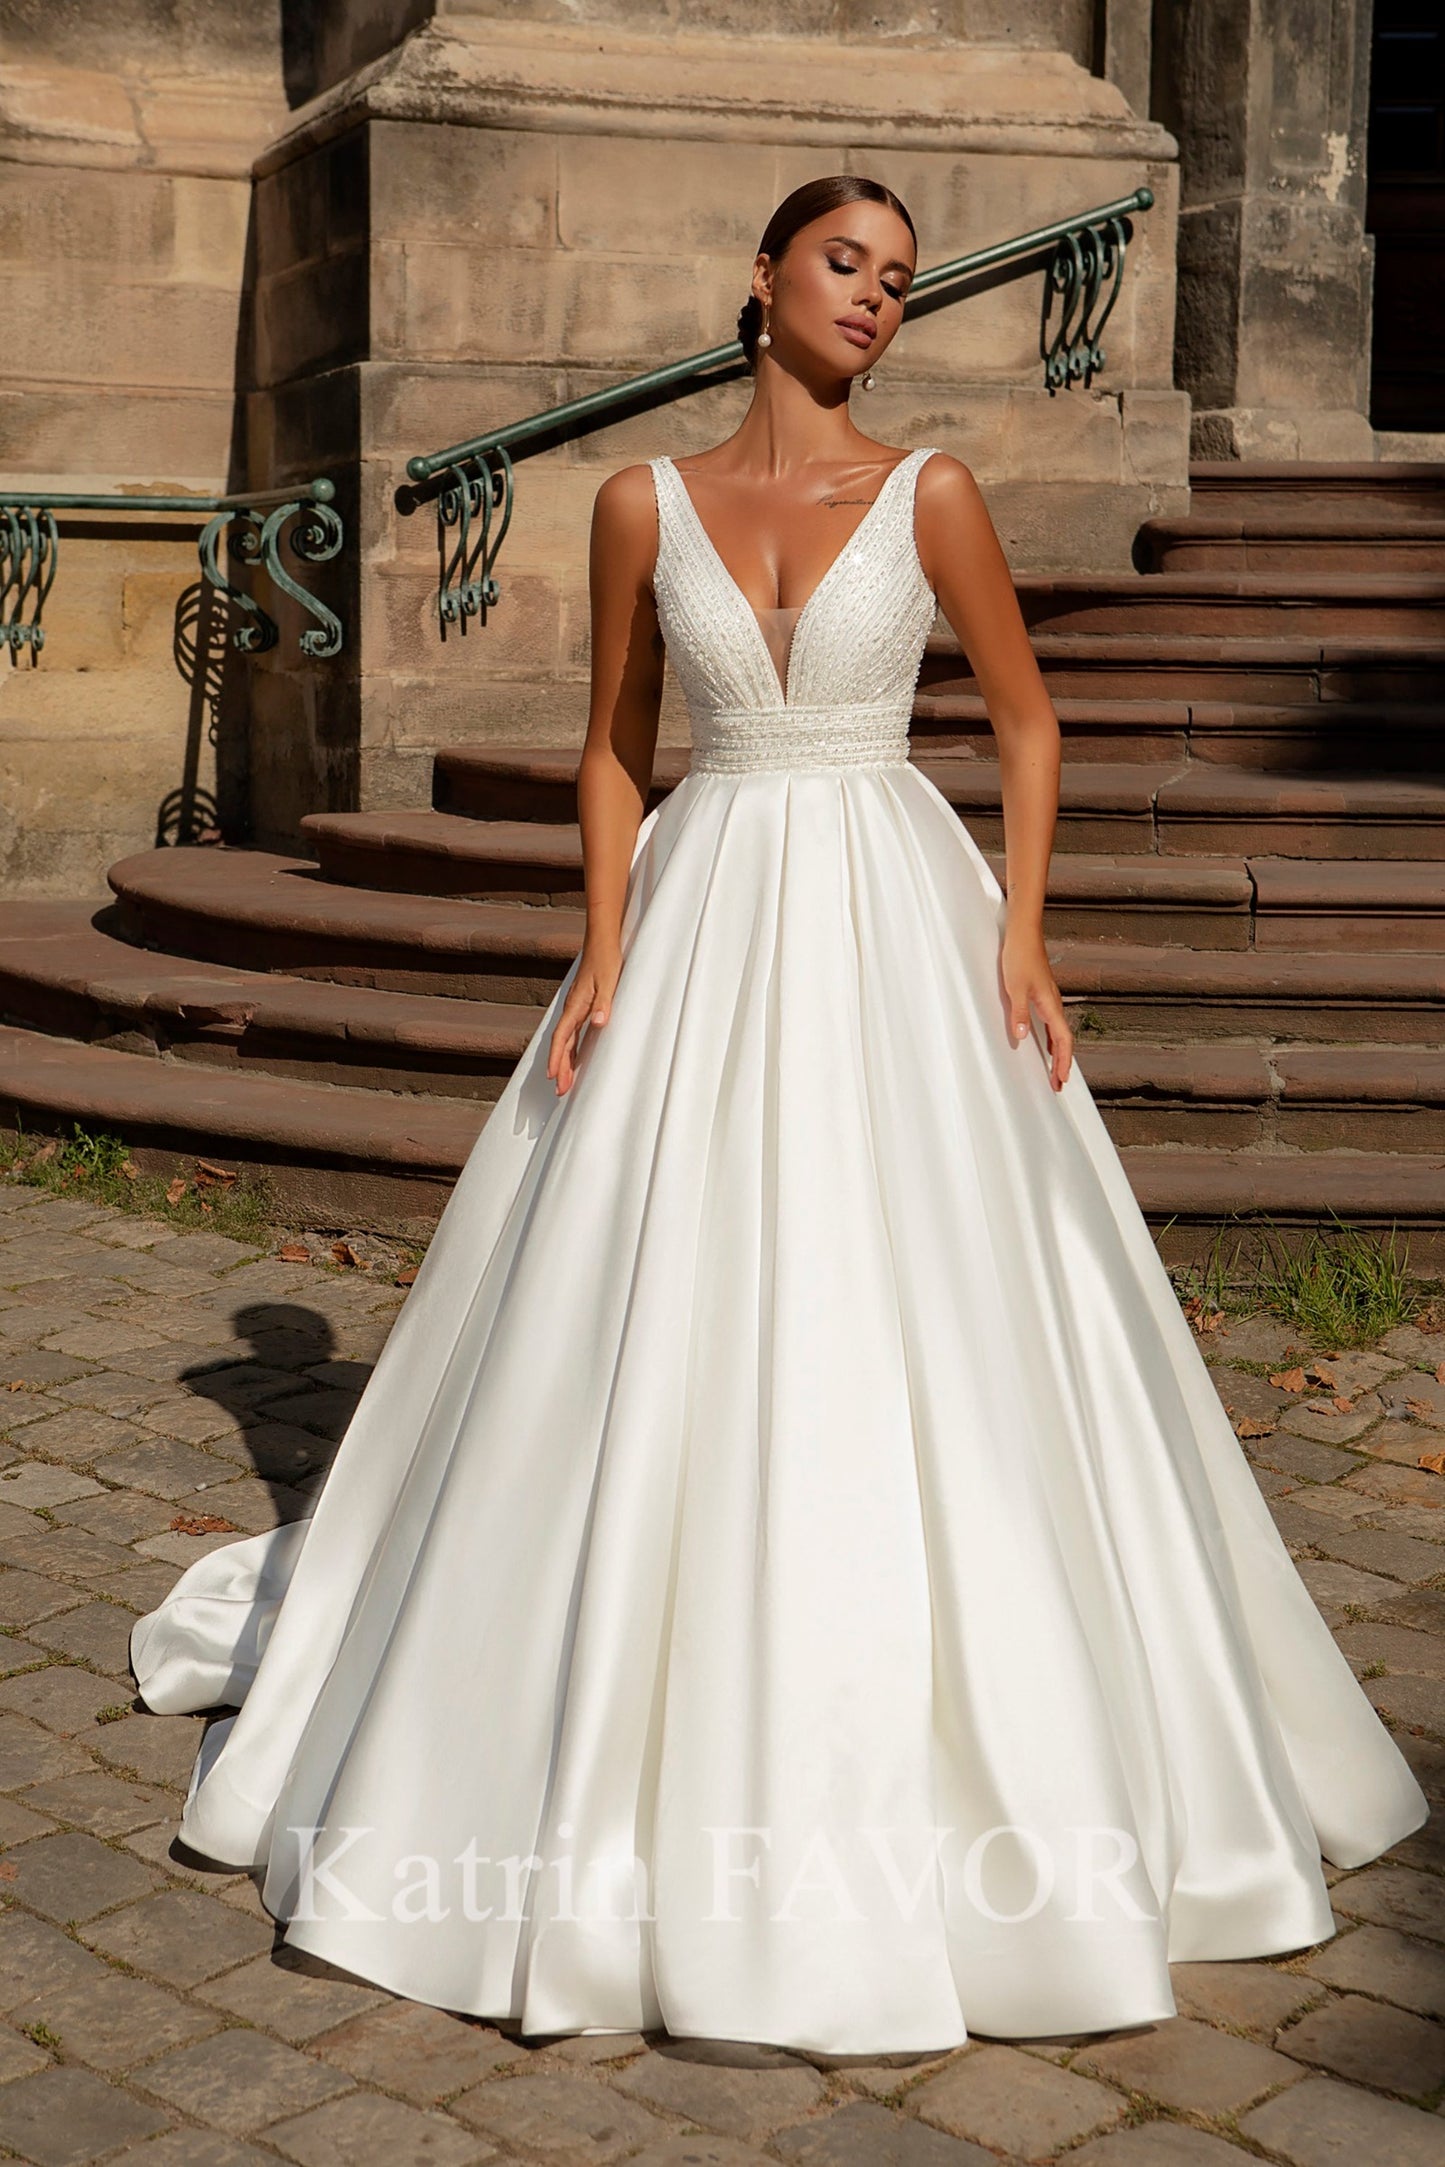 KatrinFAVORboutique-Elegant satin ballgown wedding dress with pockets